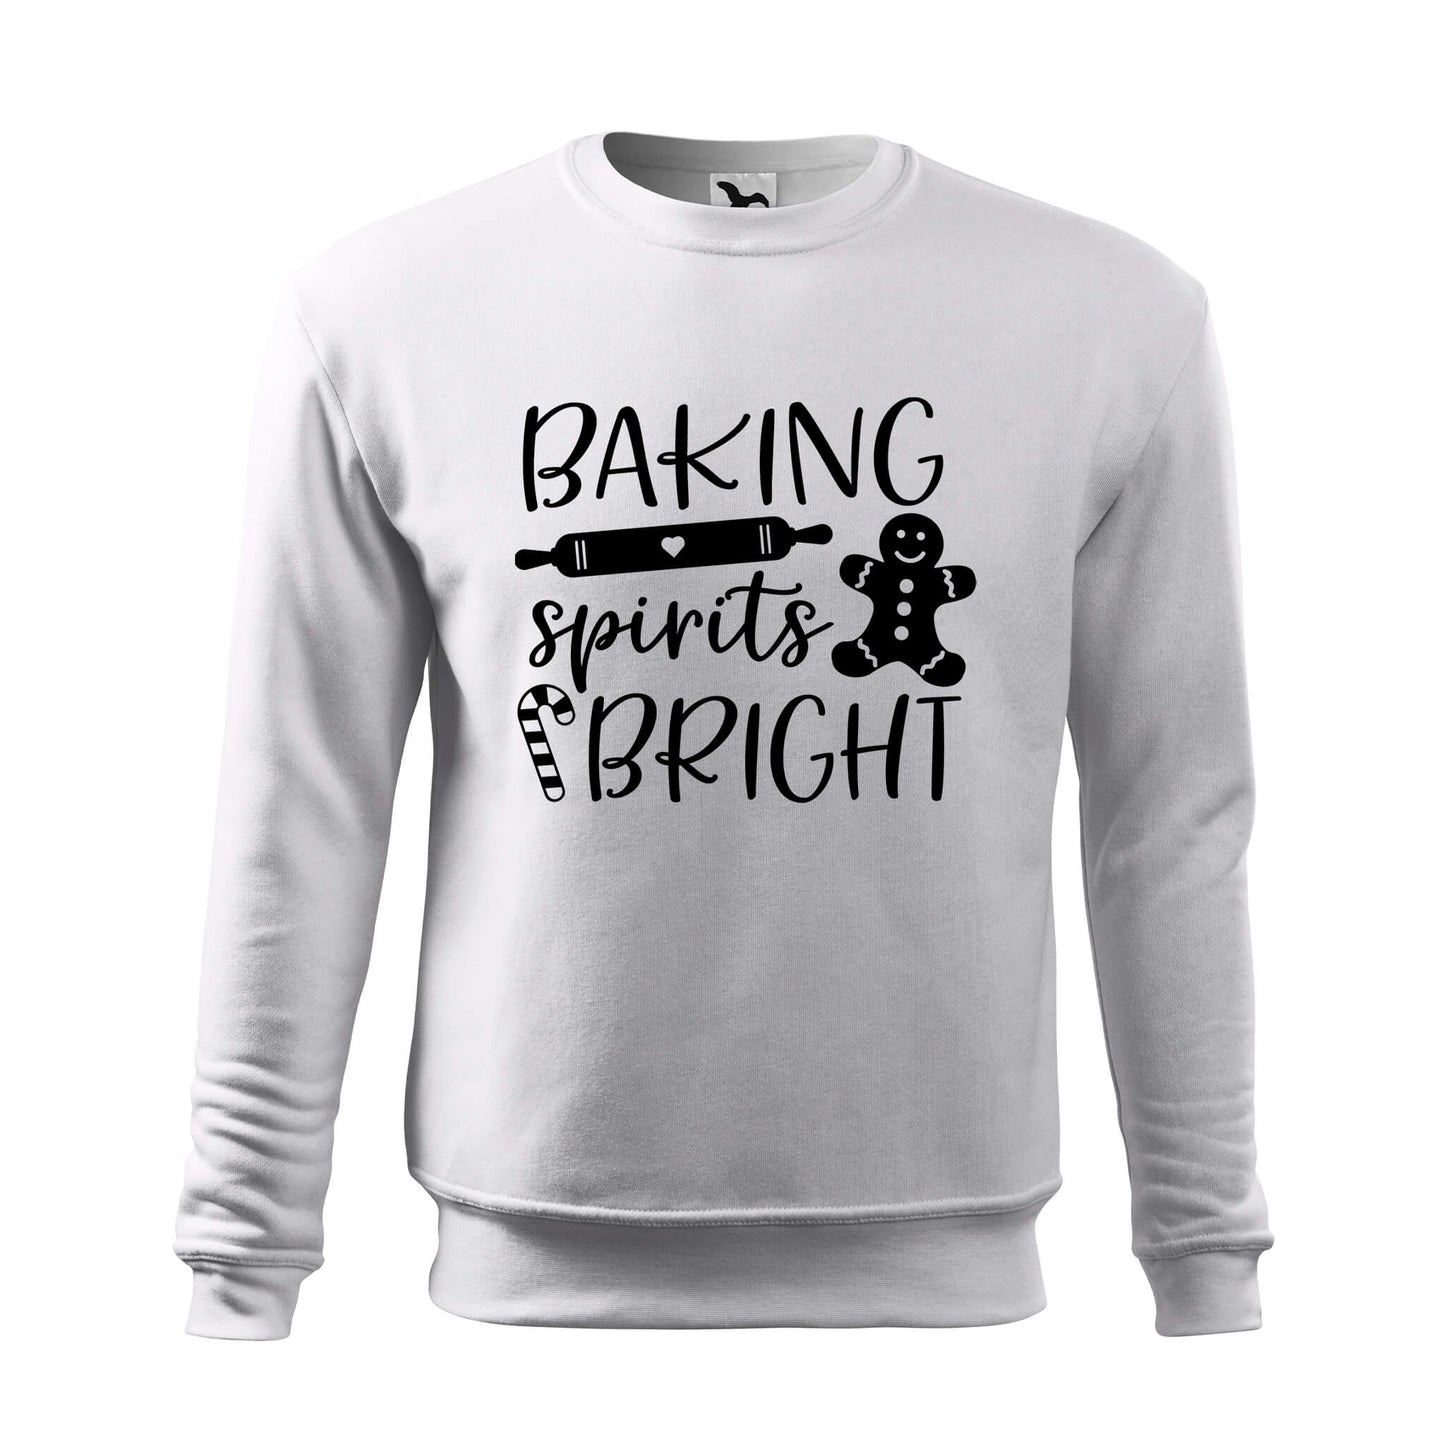 Baking spirits bright sweatshirt - rvdesignprint